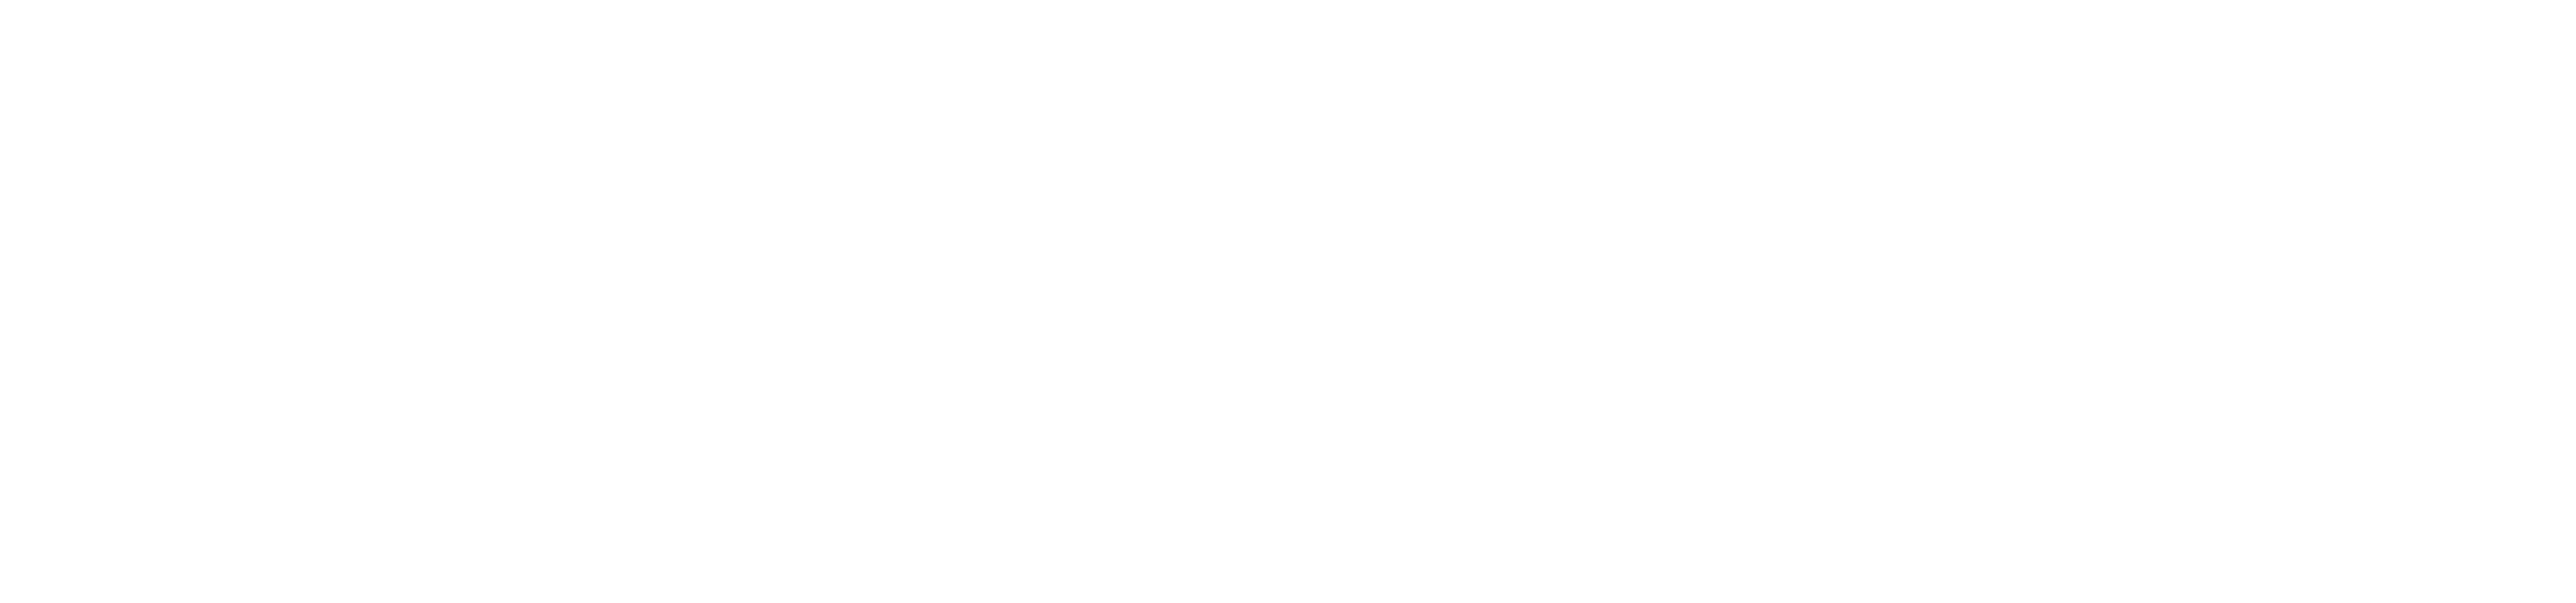 The Noteworthy (Microsoft Partner Center Pros) logo in white